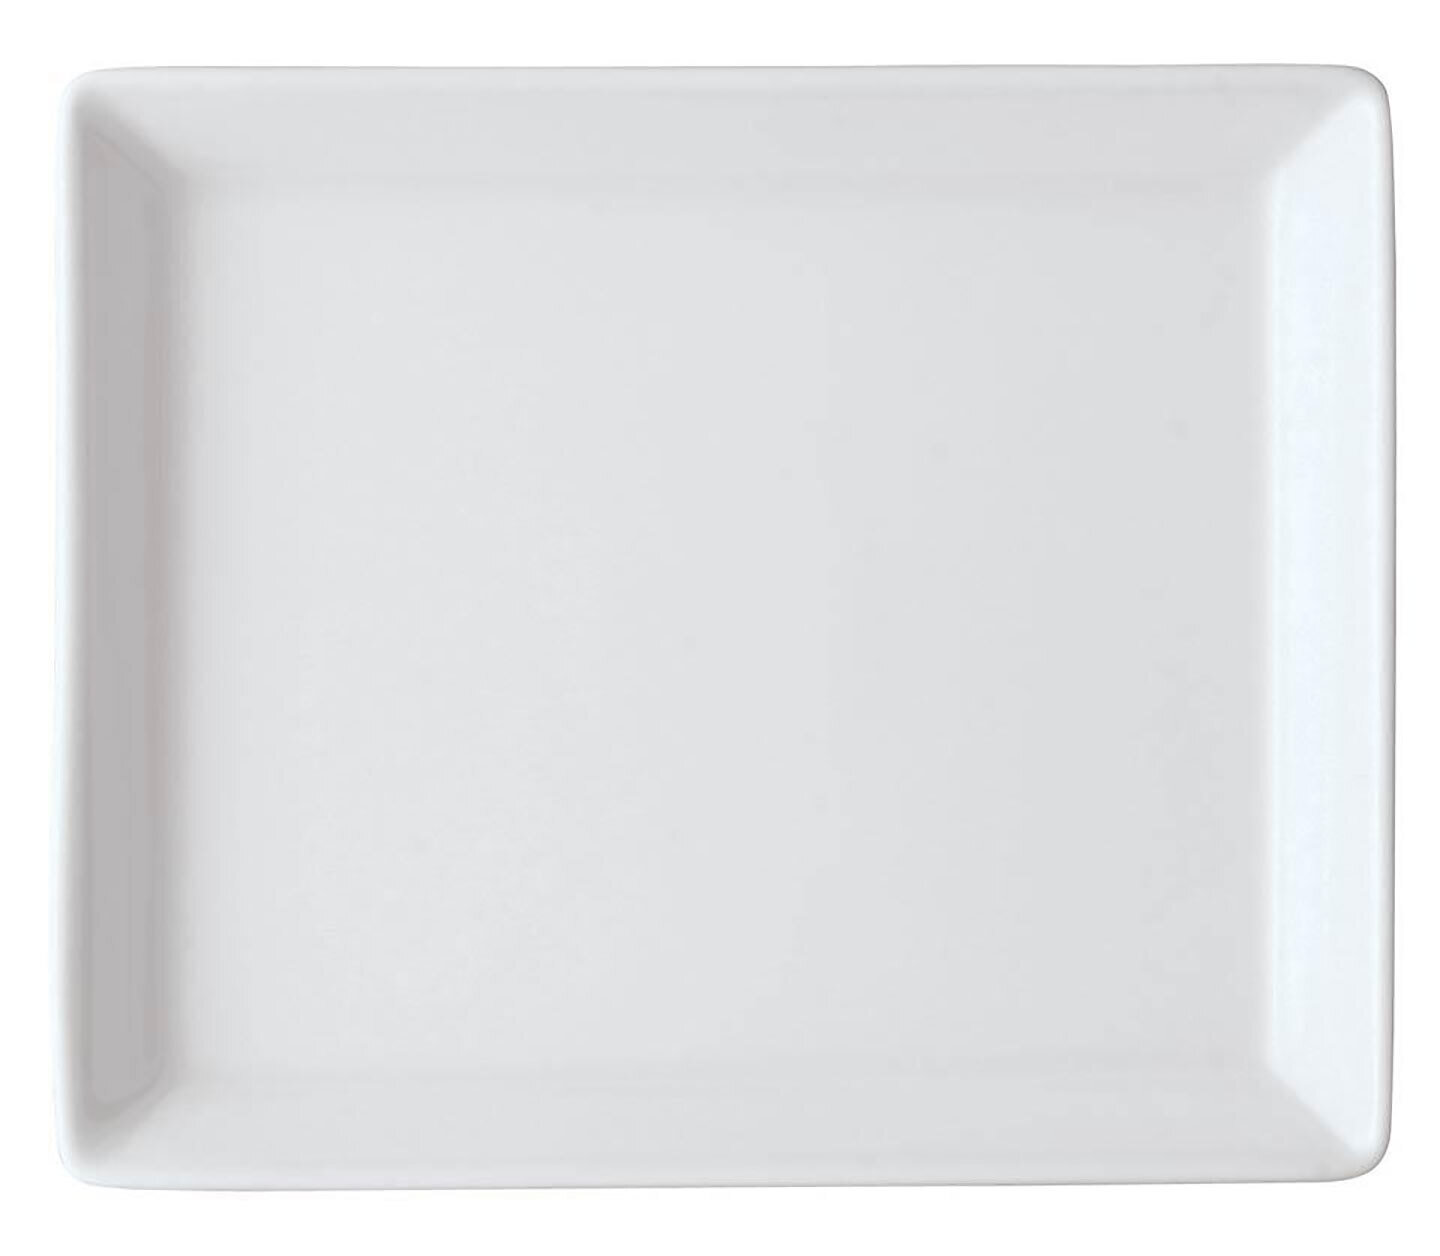 Arzberg Tric White Platter Rectangular 4 3/4 X 6 in